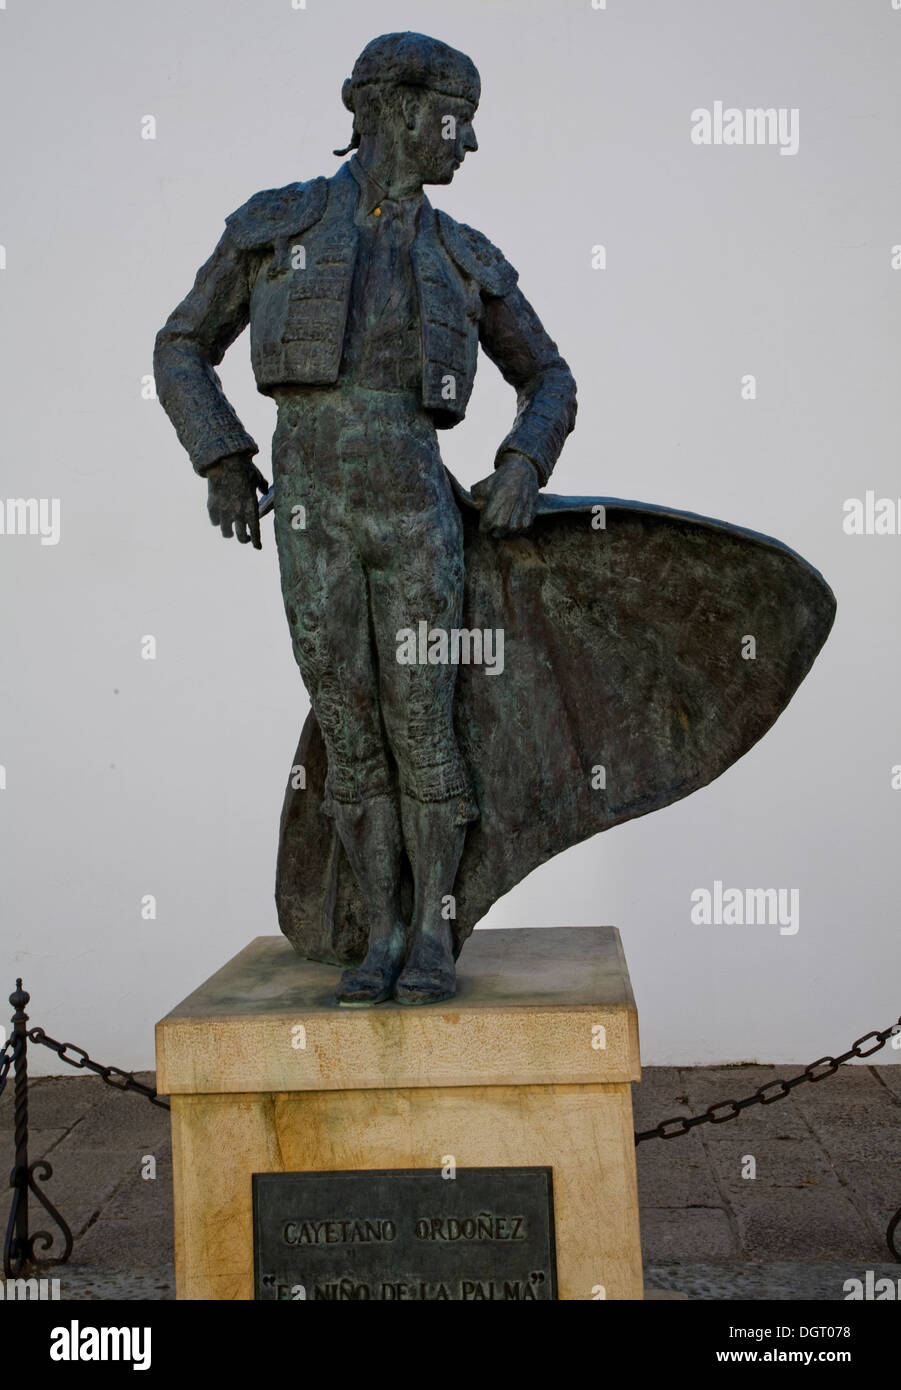 Cayetano Ordonez matador sculpture statue Ronda Spain Stock Photo